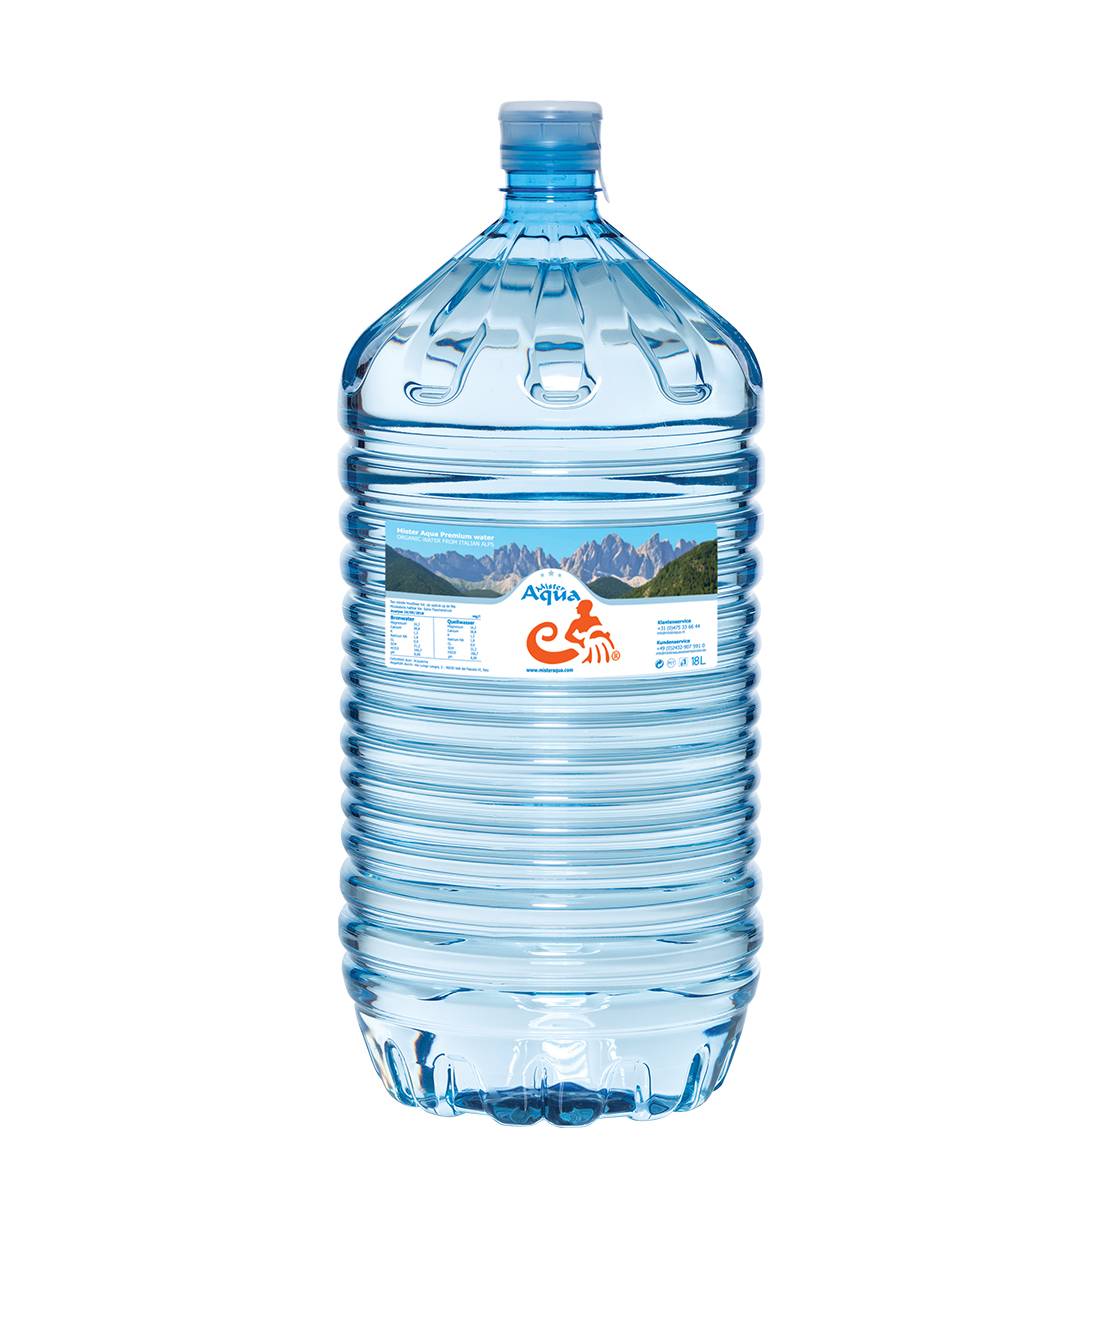 Aqua 18,9 liter drinkwater. Verfrissend en